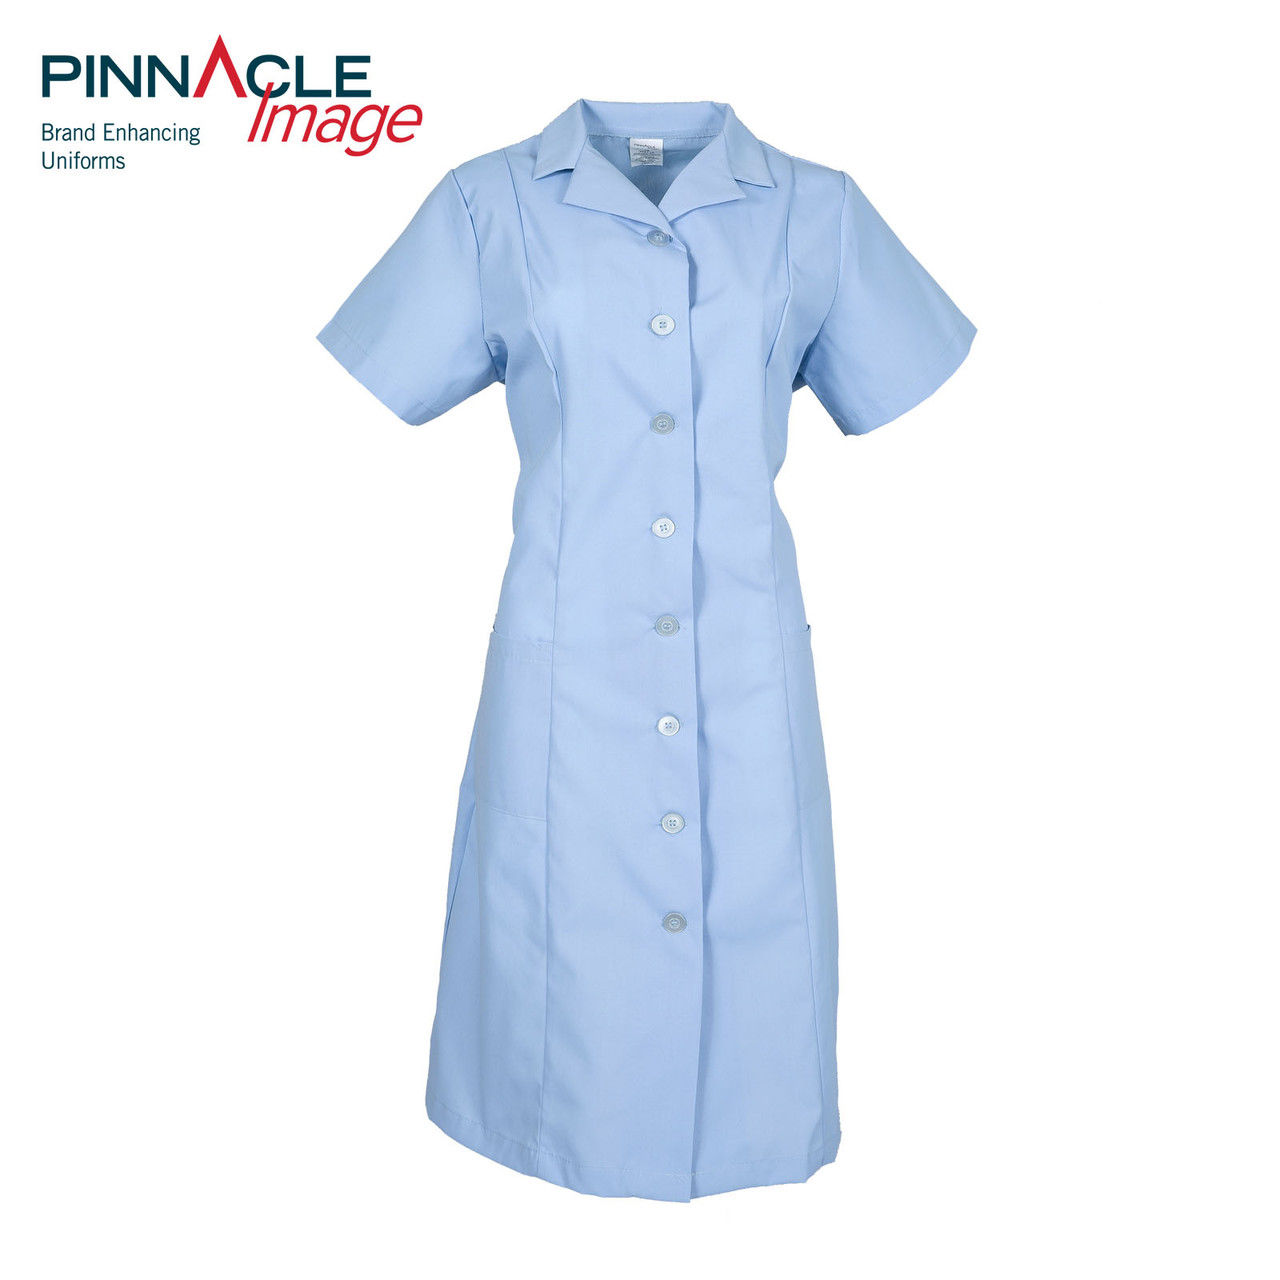 Is the color of the blue uniform dress similar to a light blue princess dress?